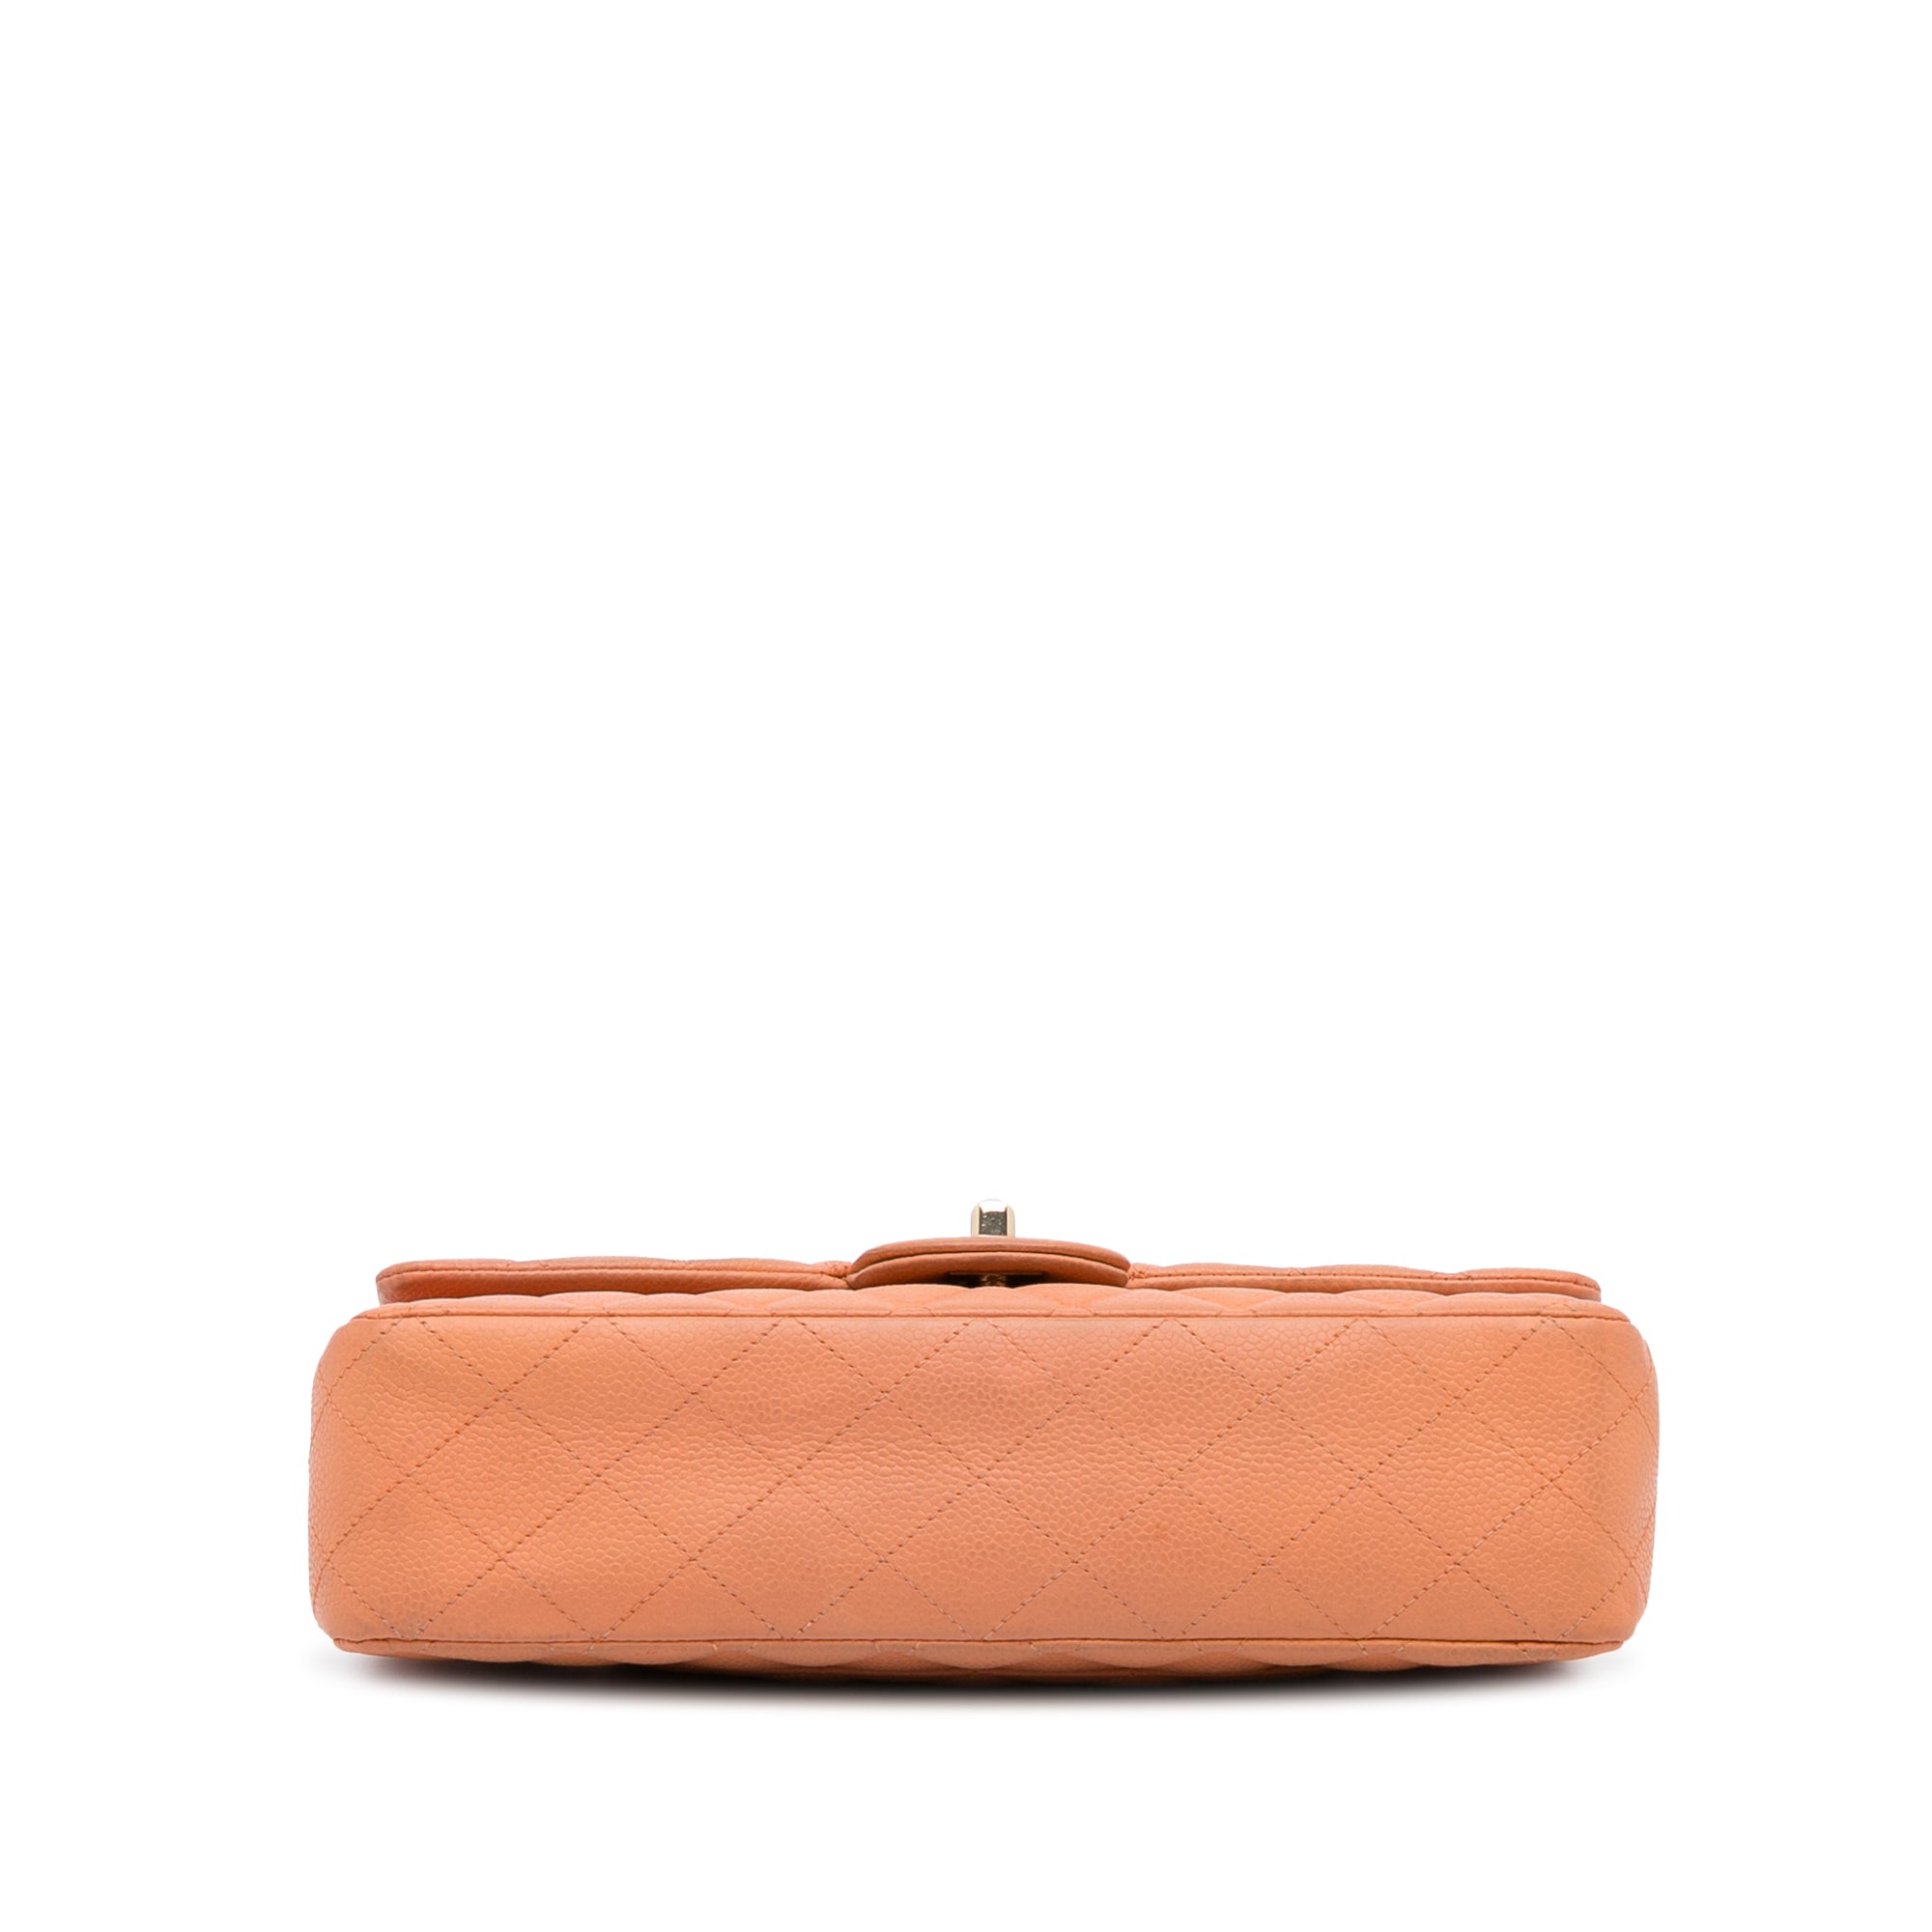 chanel purse orange